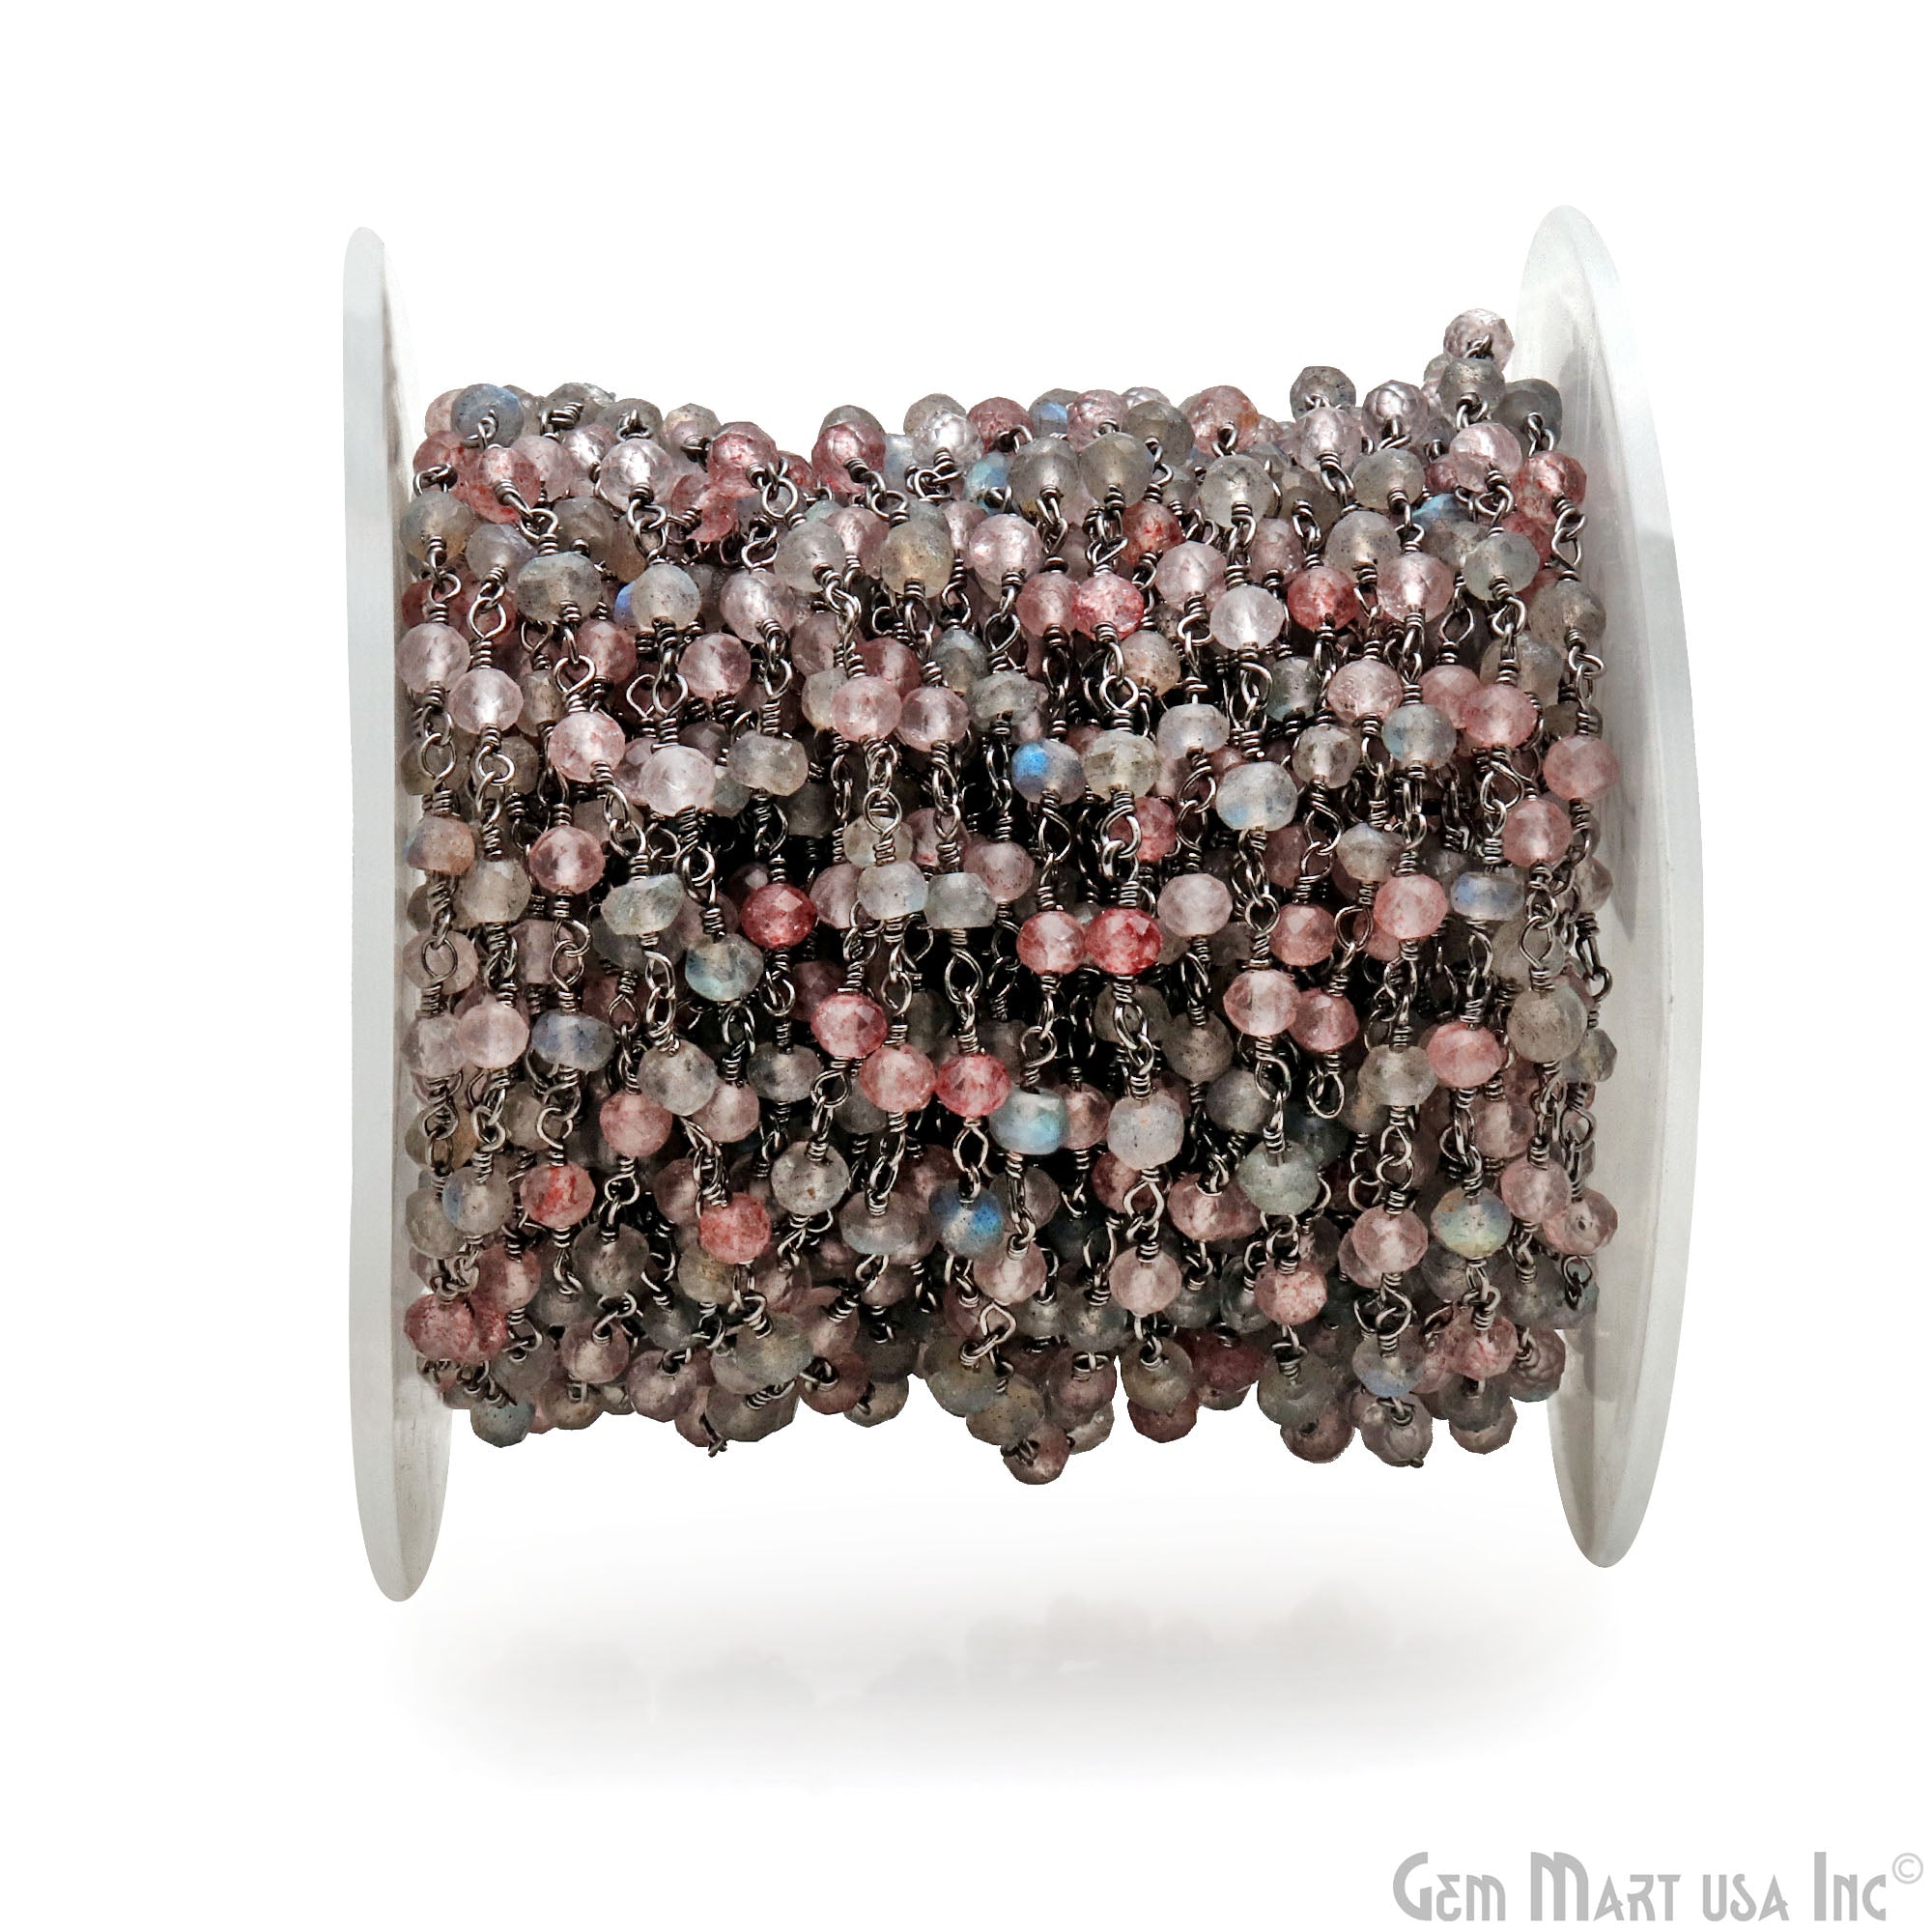 Labradorite & Strawberry Quartz Beads 3-3.5mm Oxidized Wire Wrapped Rosary Chain